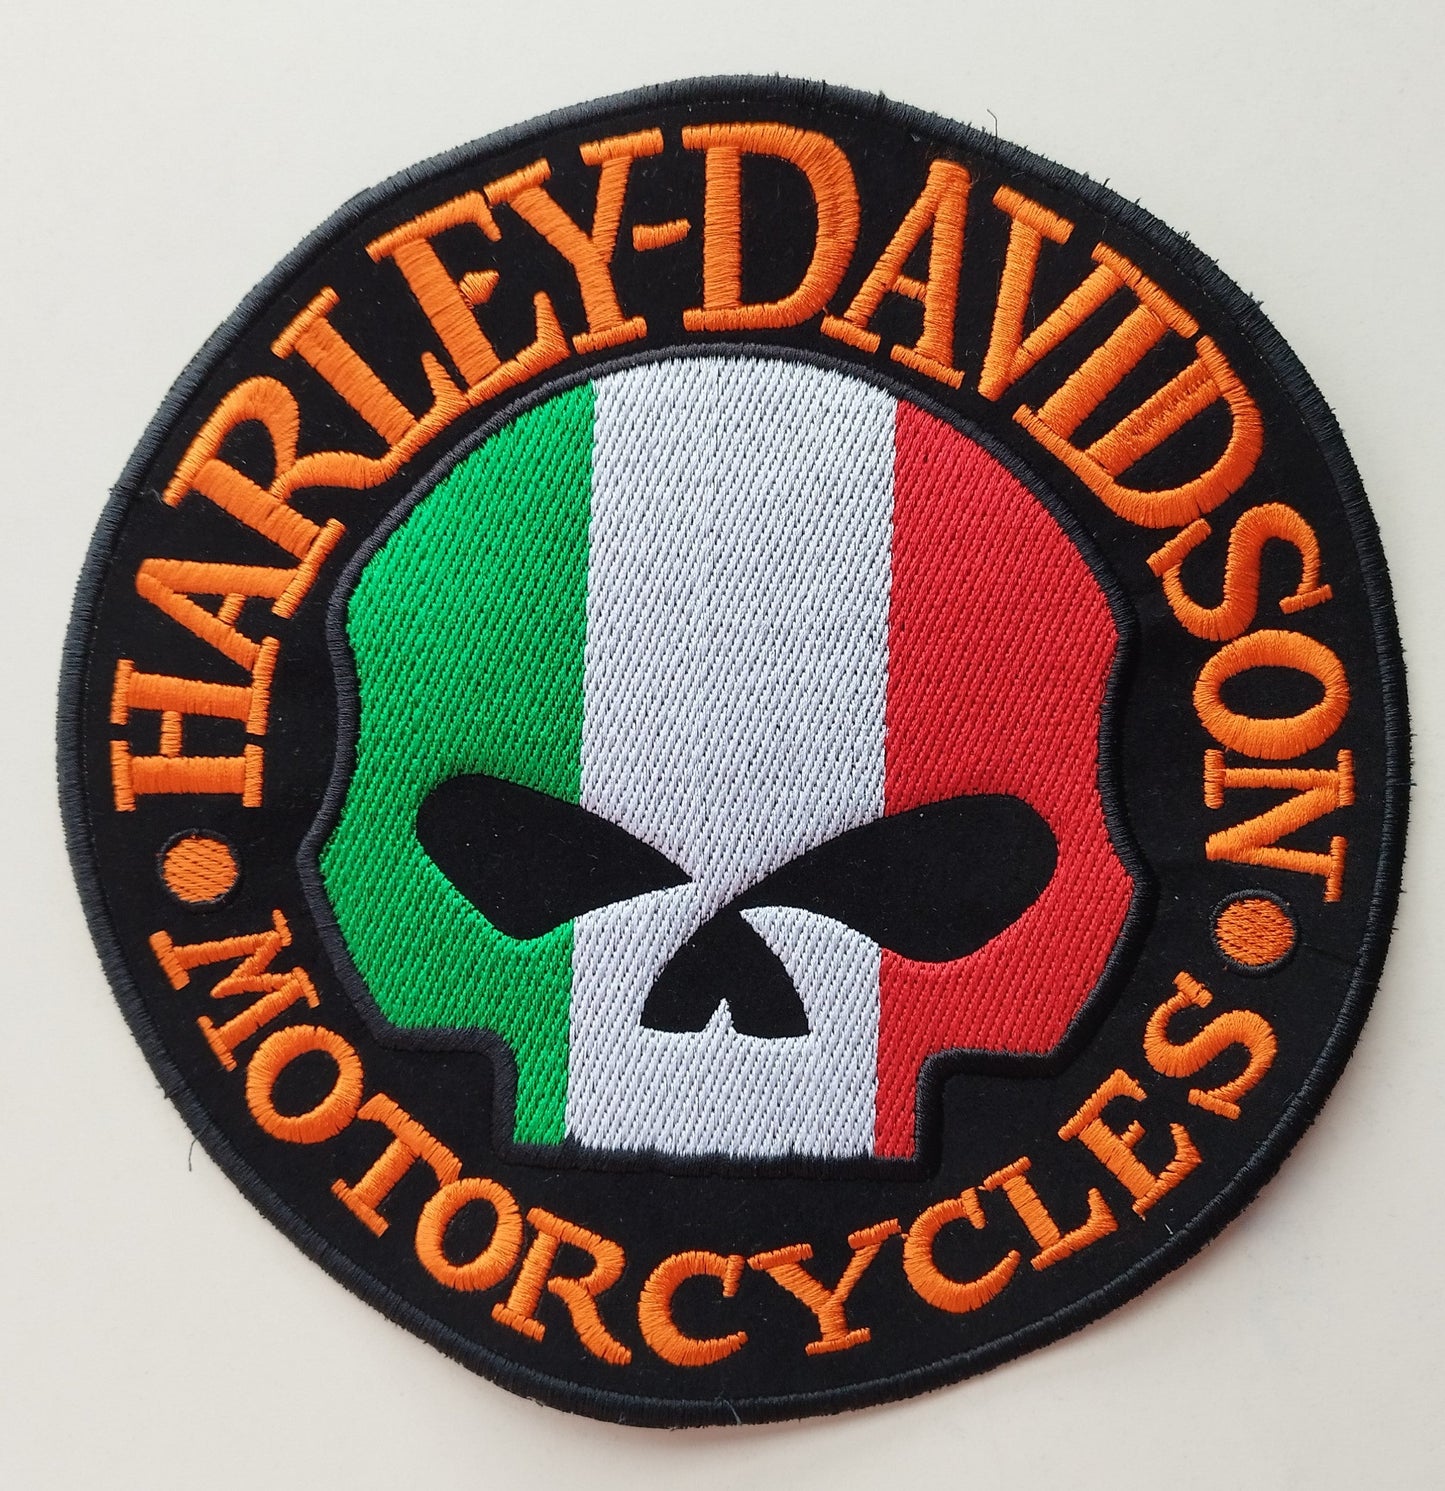 Piccola patch toppa SKULL HD Motorcycles scritta arancio, bandiera italiana